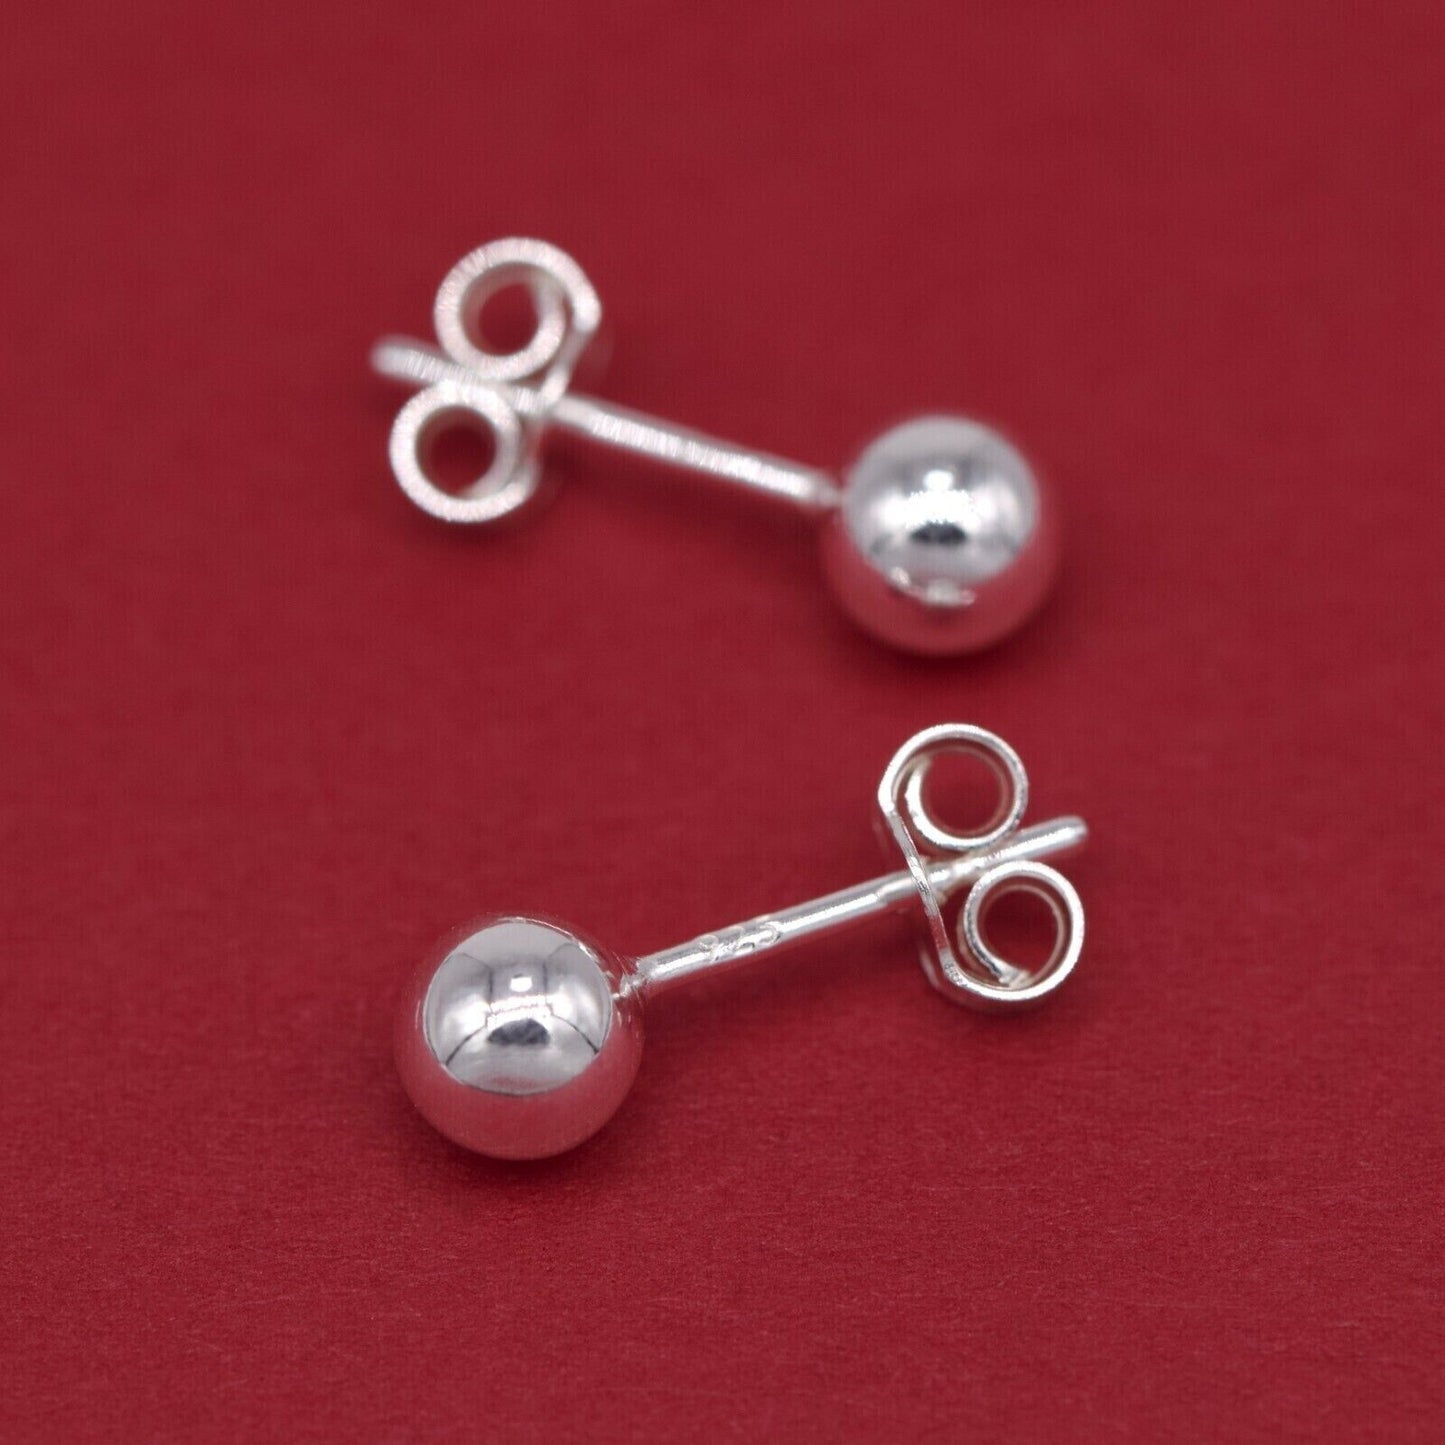 Genuine 925 Sterling Silver 5mm Plain Polished Ball Studs/Earrings